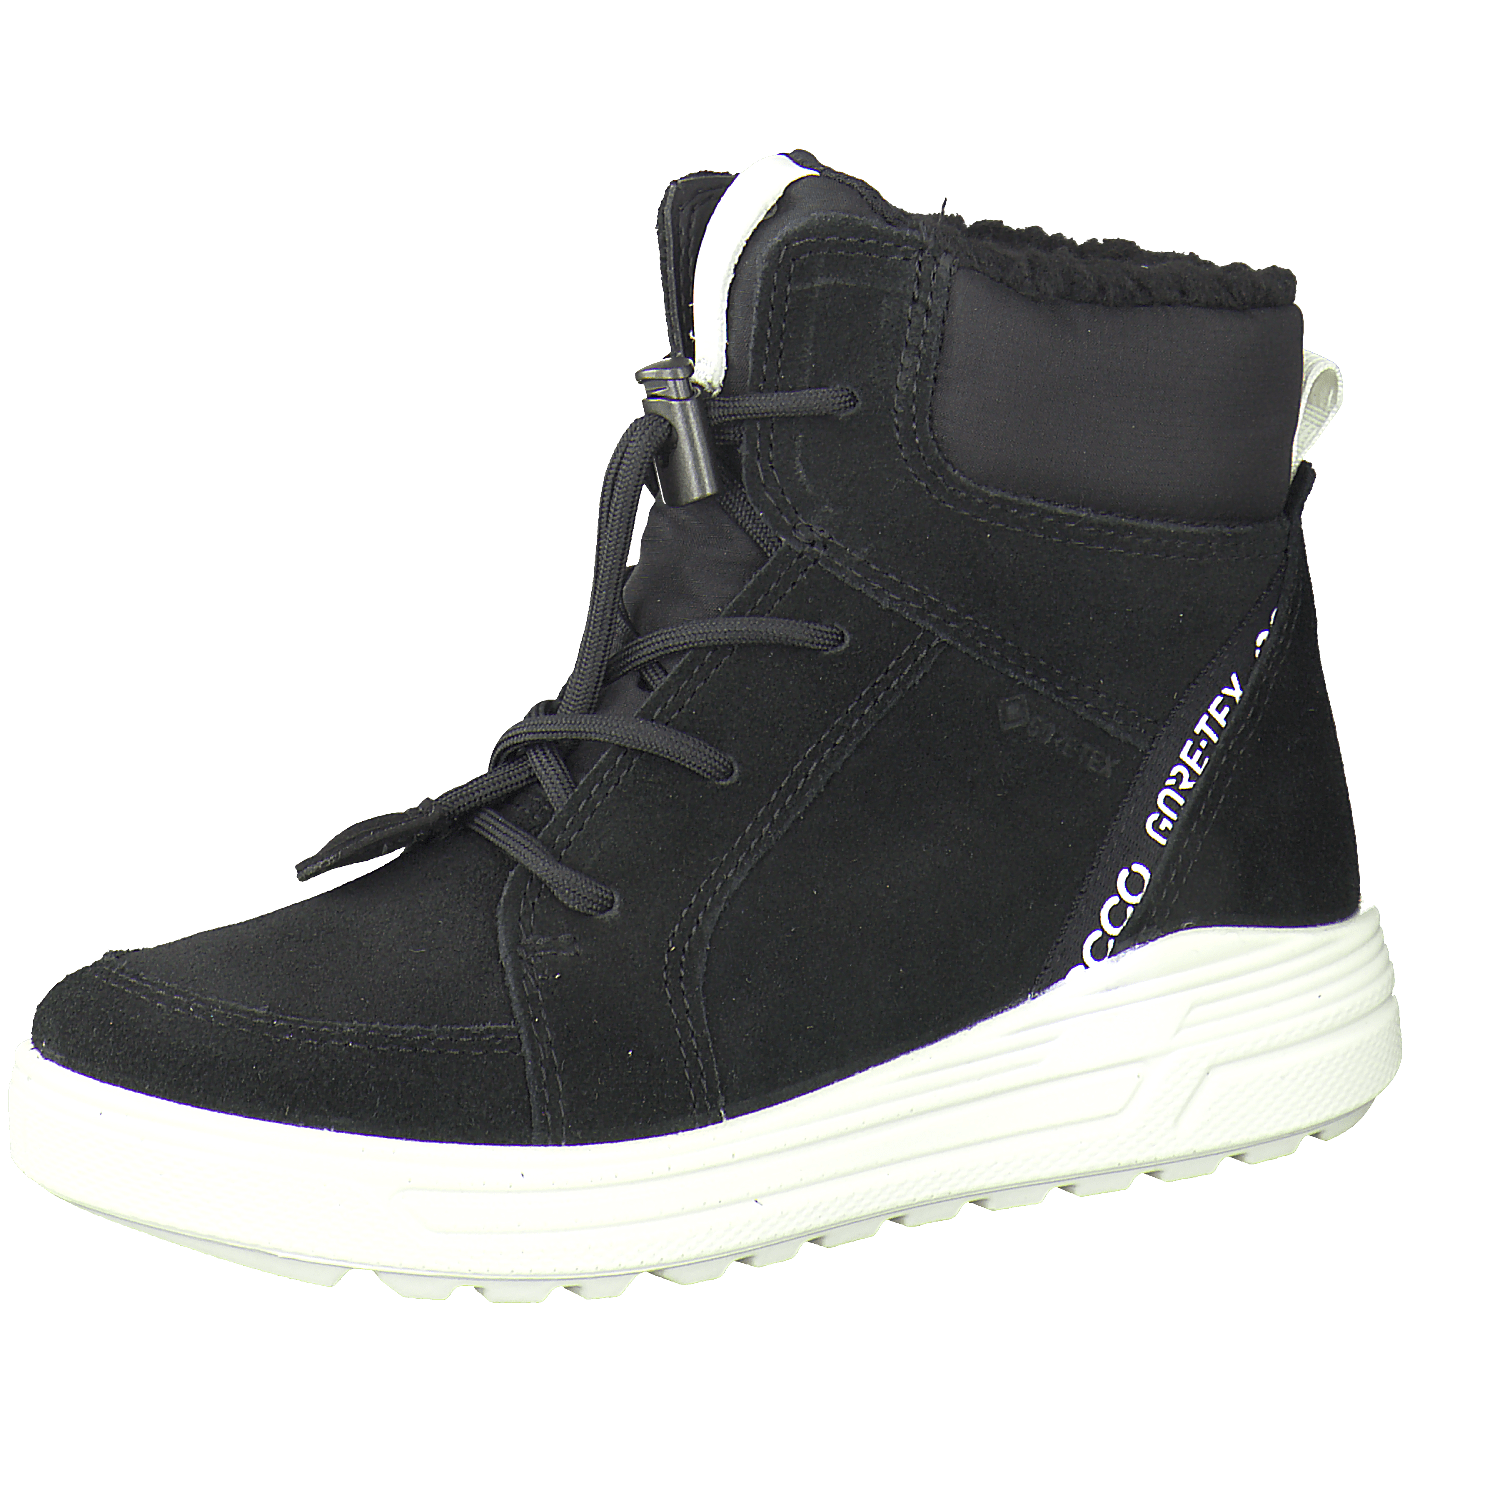 Winterstiefel Urban Snowboarder SL GTX – asmus shoes & beautiful things | Stiefel